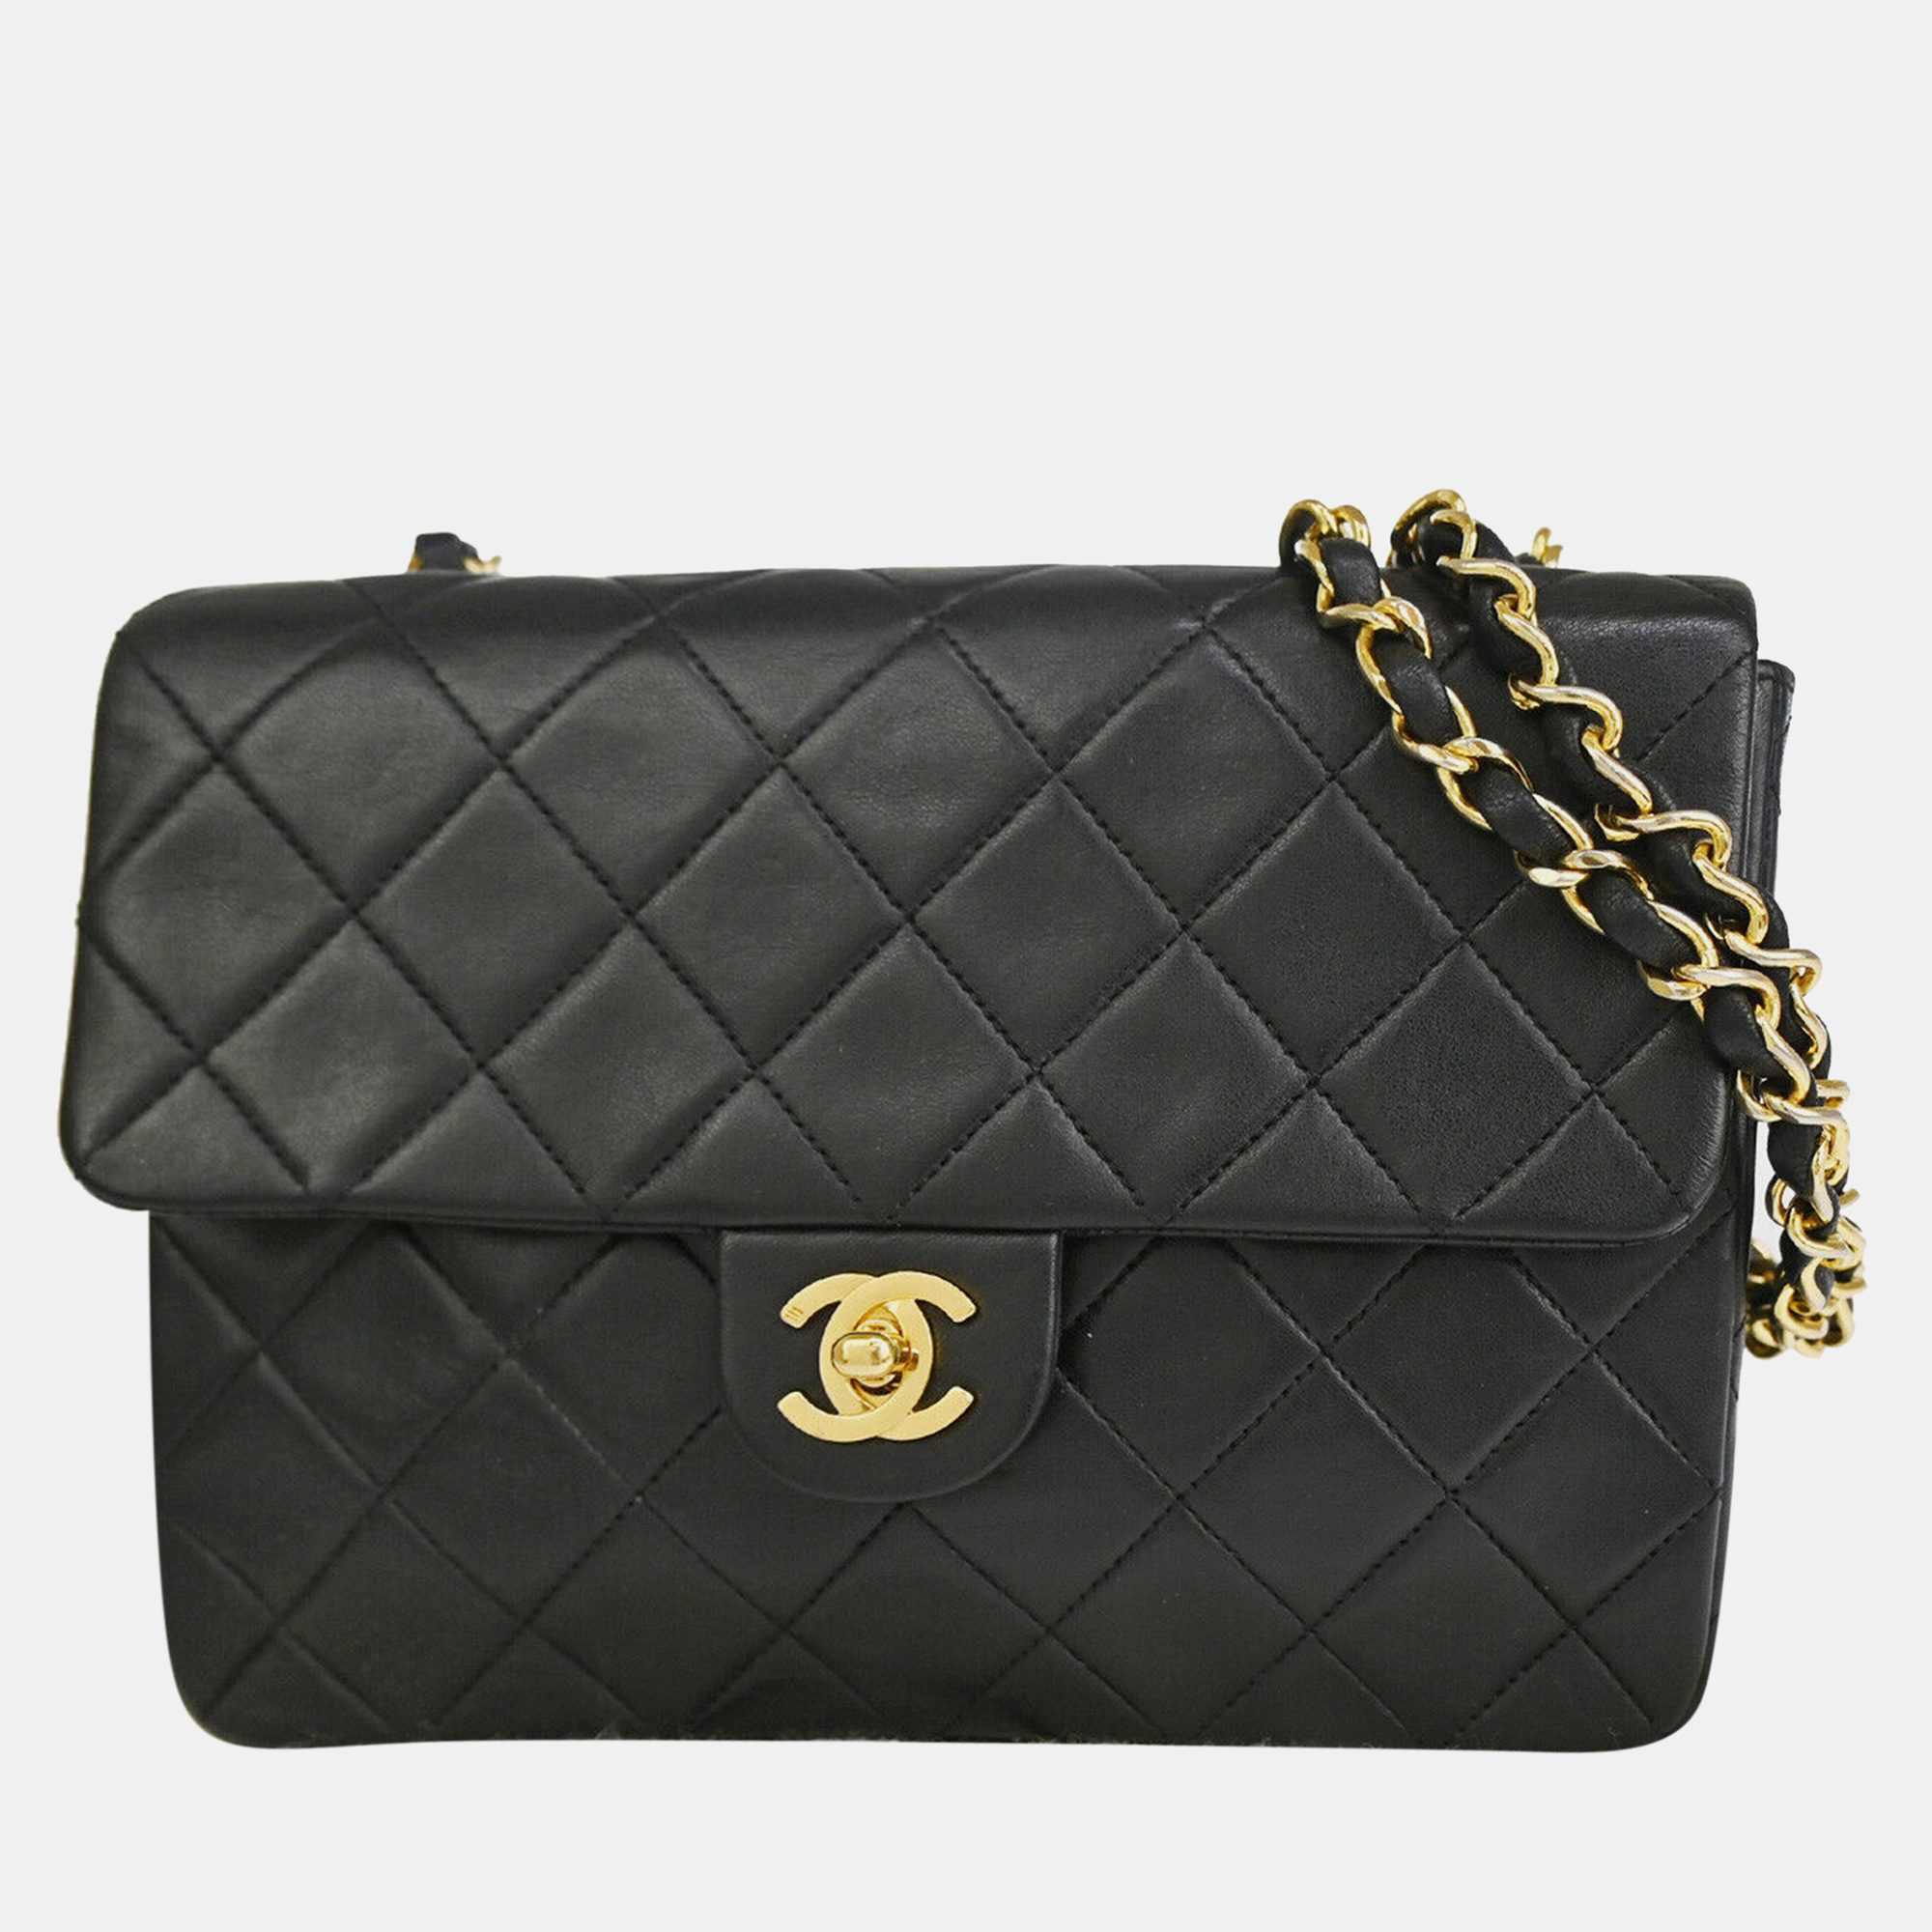 Chanel black leather xs classic single flap shoulder bags